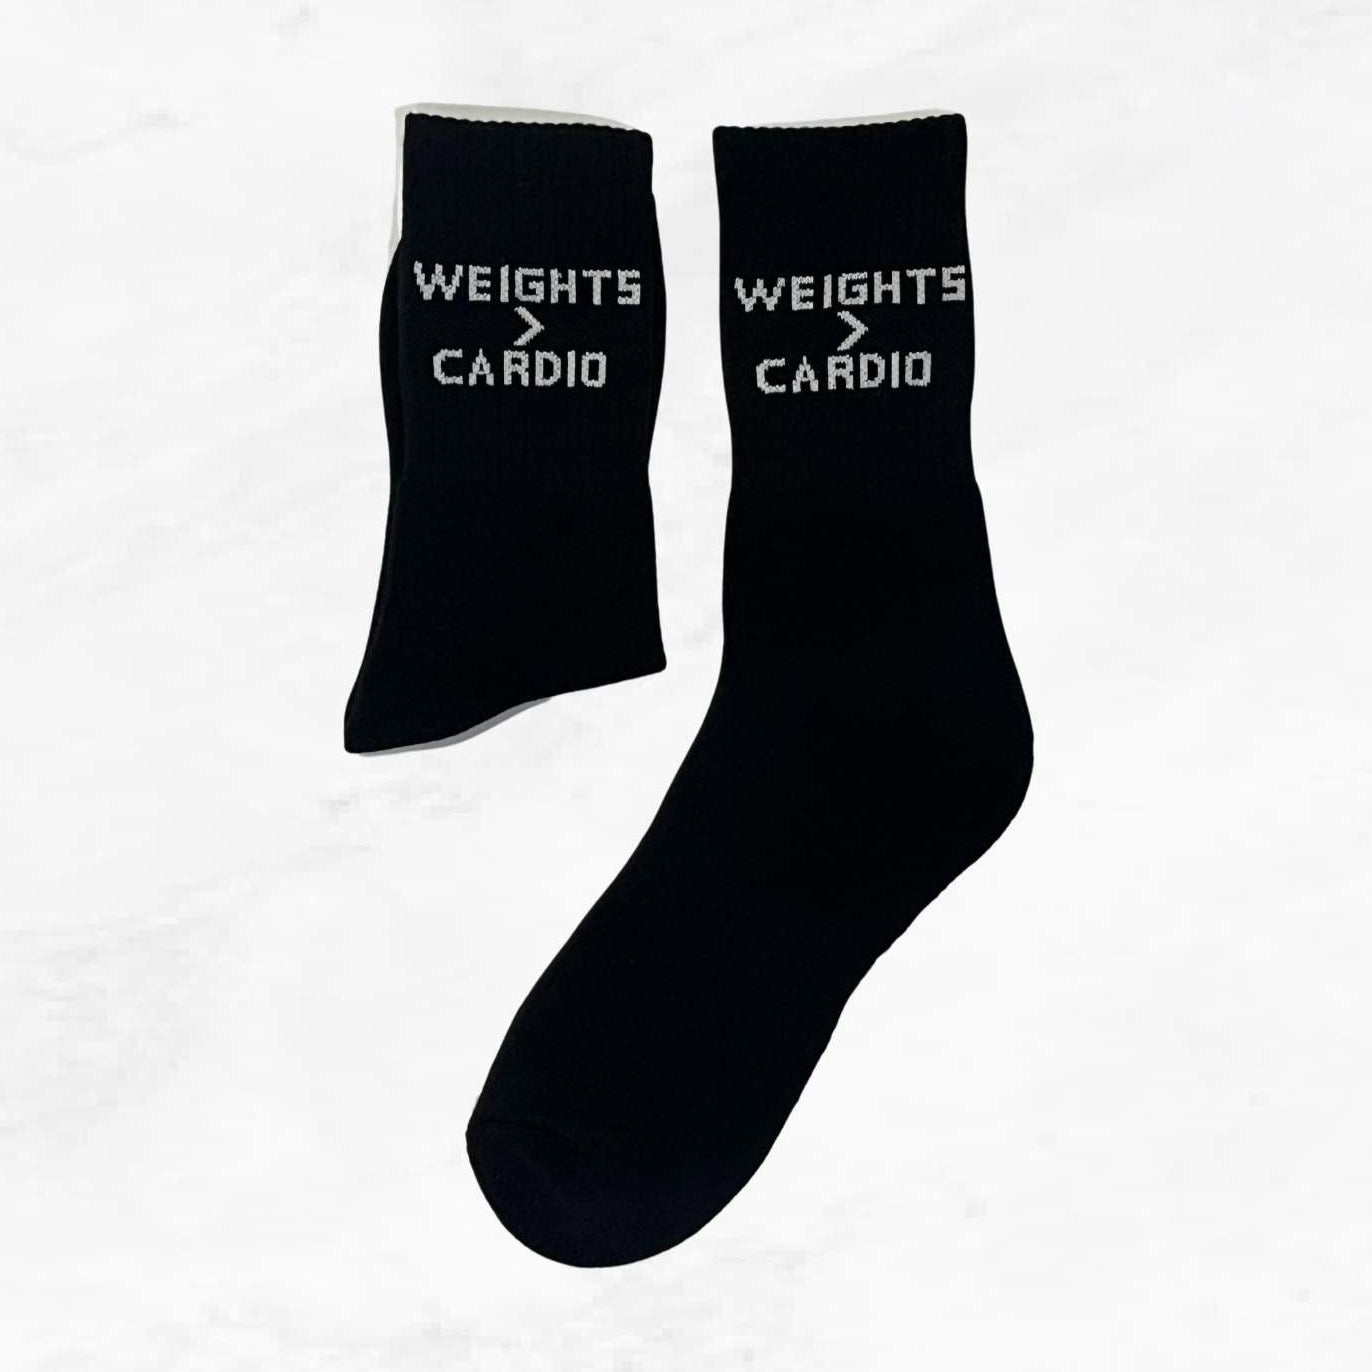 Weights>Cardio